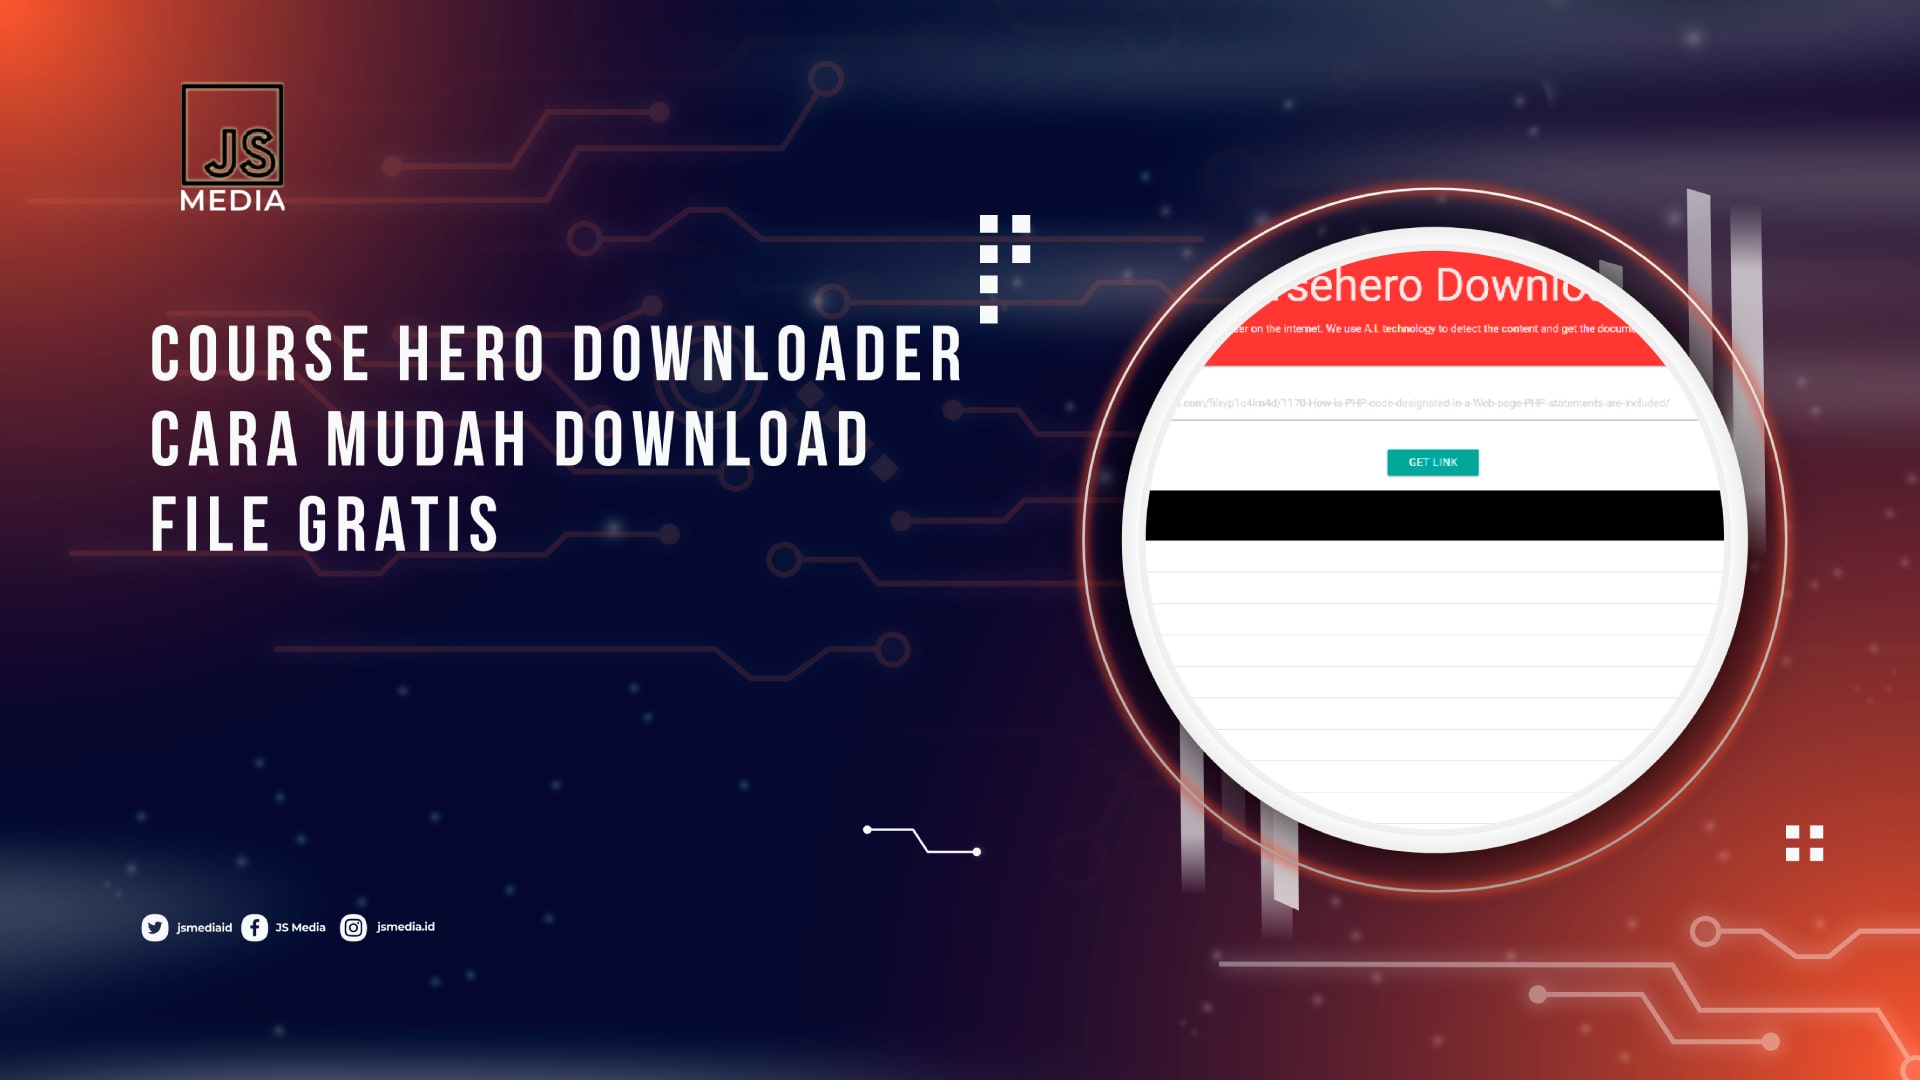 Course Hero Downloader - wide 2